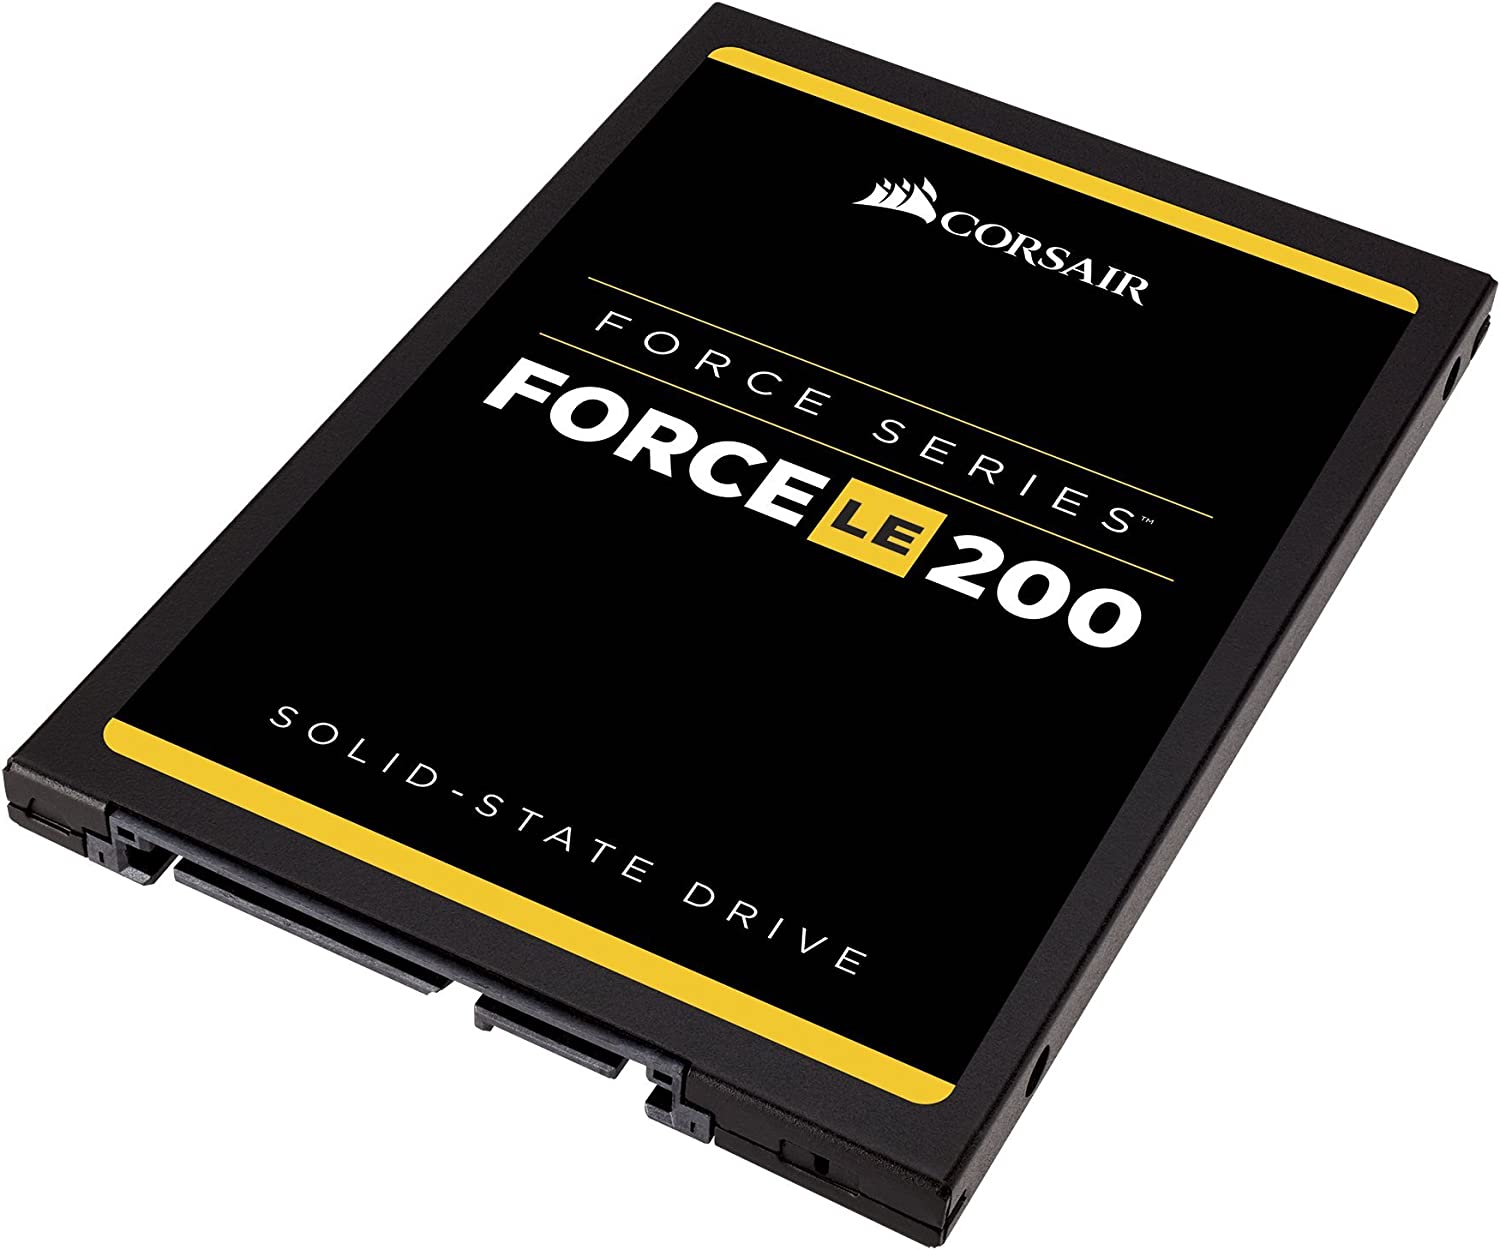 Corsair Force LE200 240GB 2.5" SSD 560/530MB/s